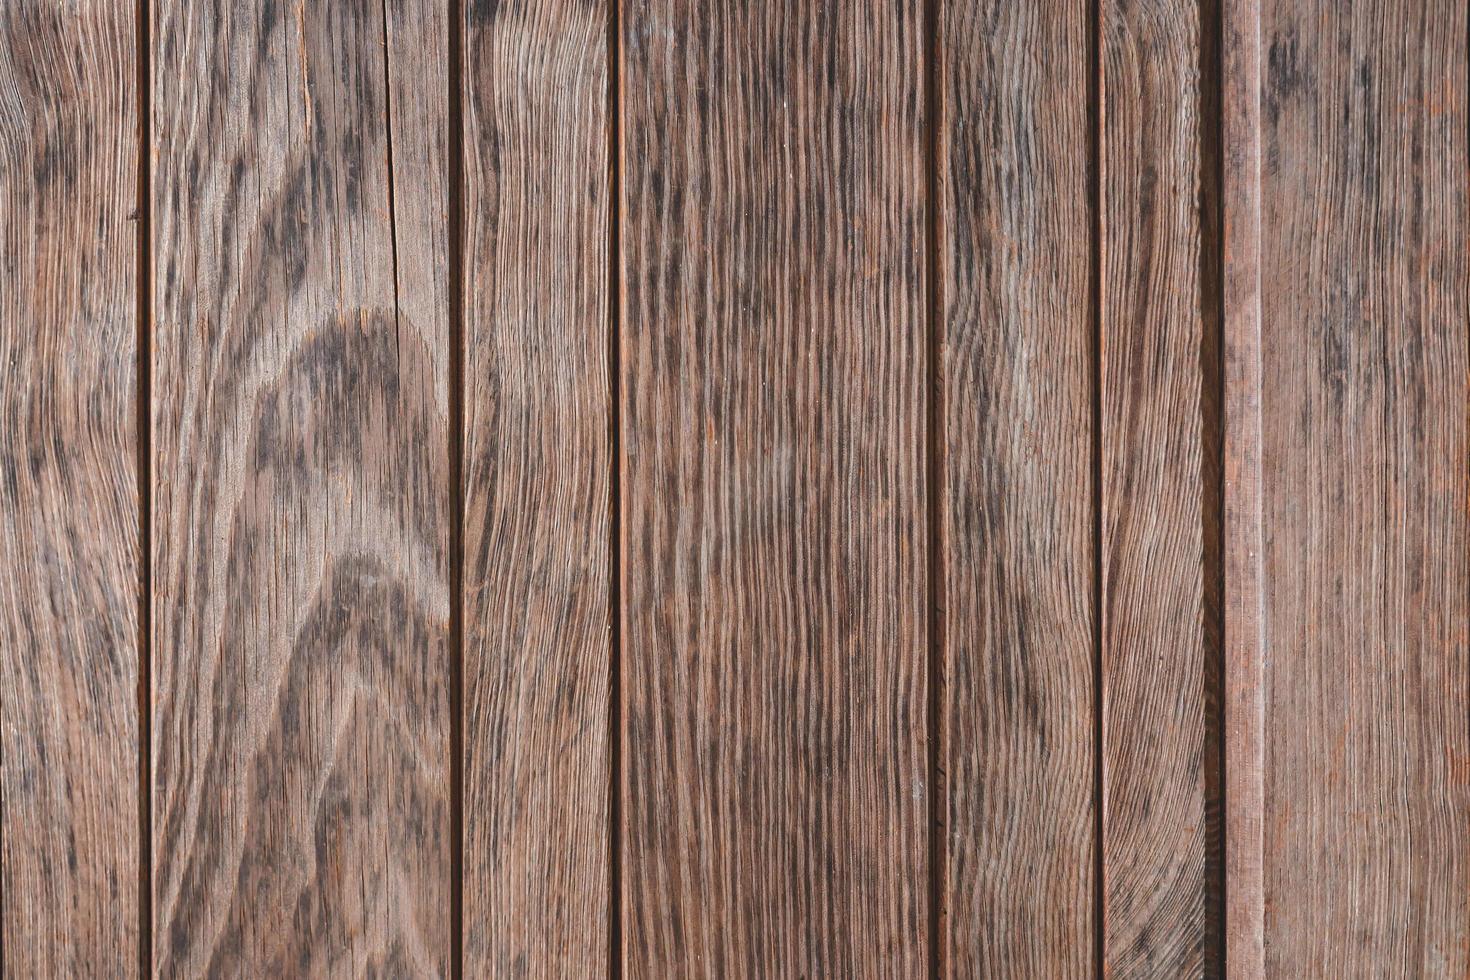 Natural hardwood floor texture photo